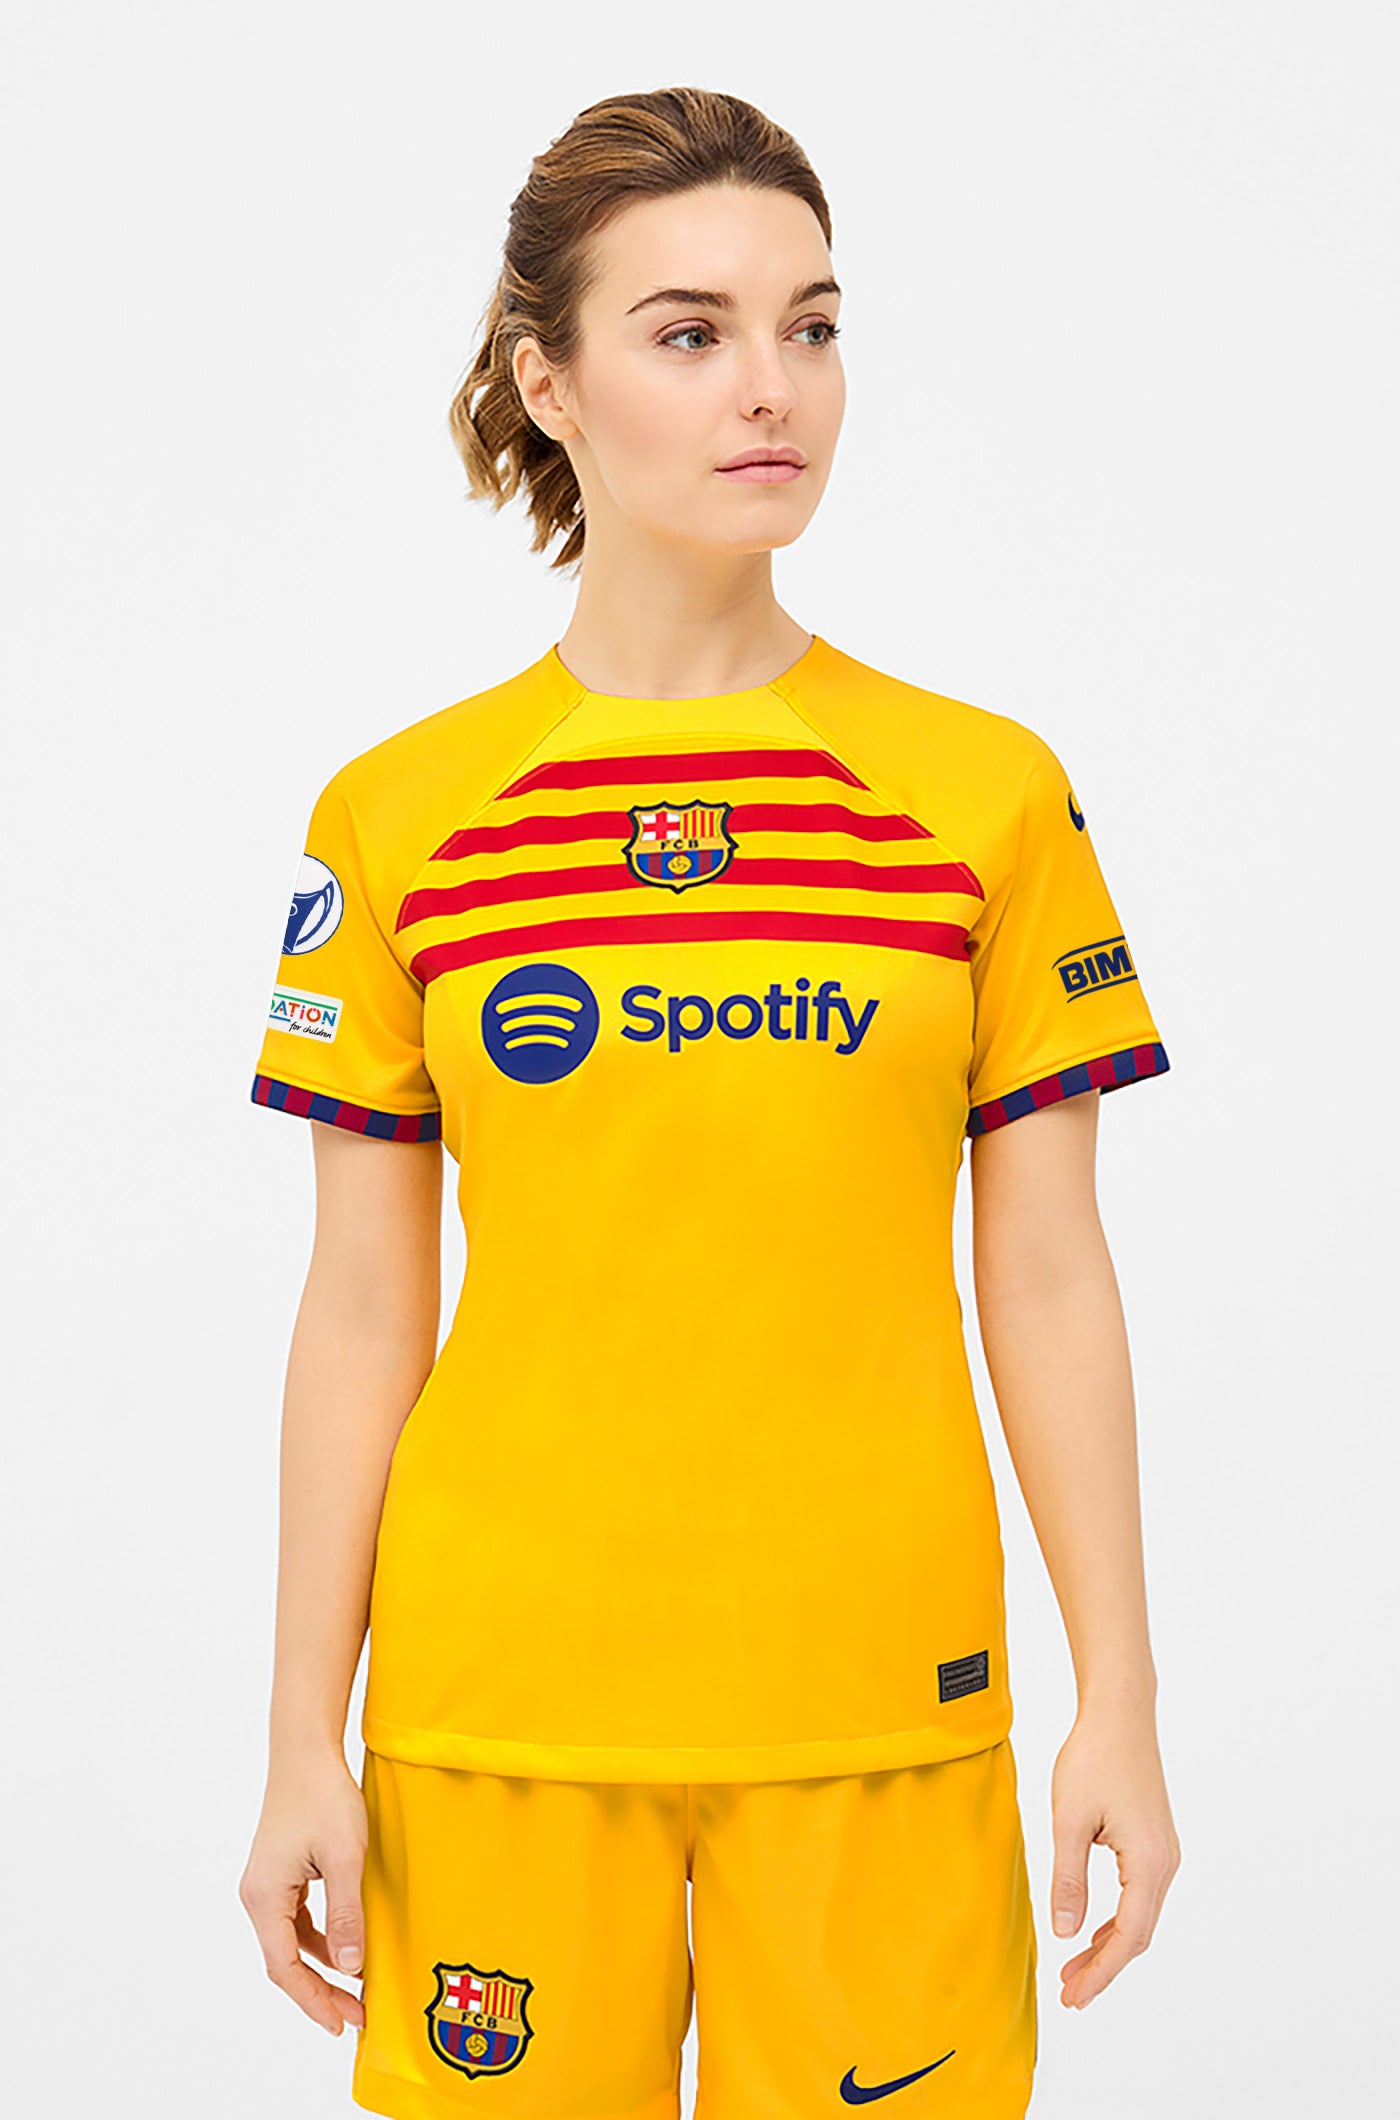 UWCL FC Barcelona fourth shirt 23/24 - Women  - MARTA